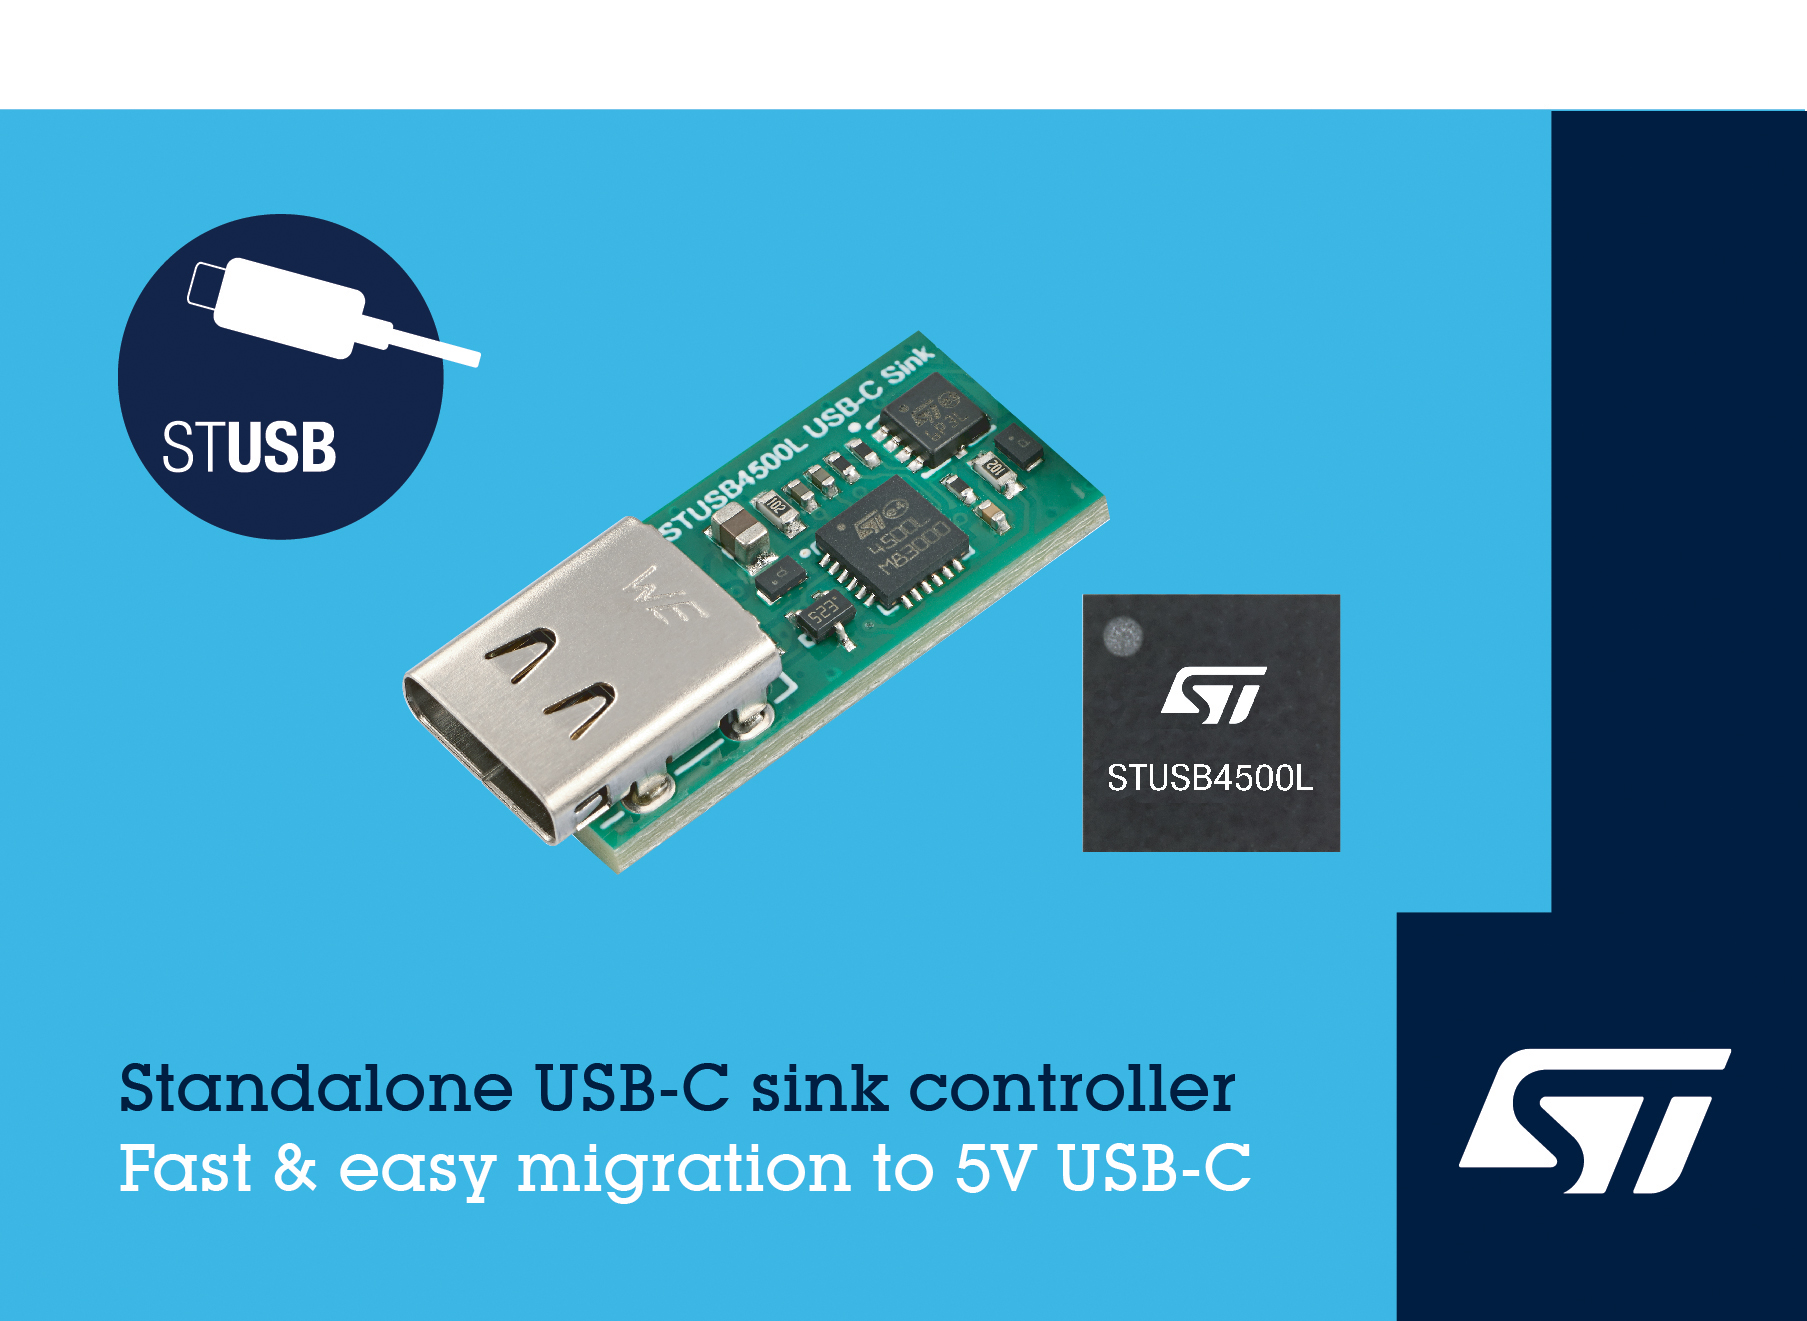 STマイクロエレクトロニクス、 5V VBUS駆動のスタンドアロン型USB Type-C®シンクポート・コントローラを発表